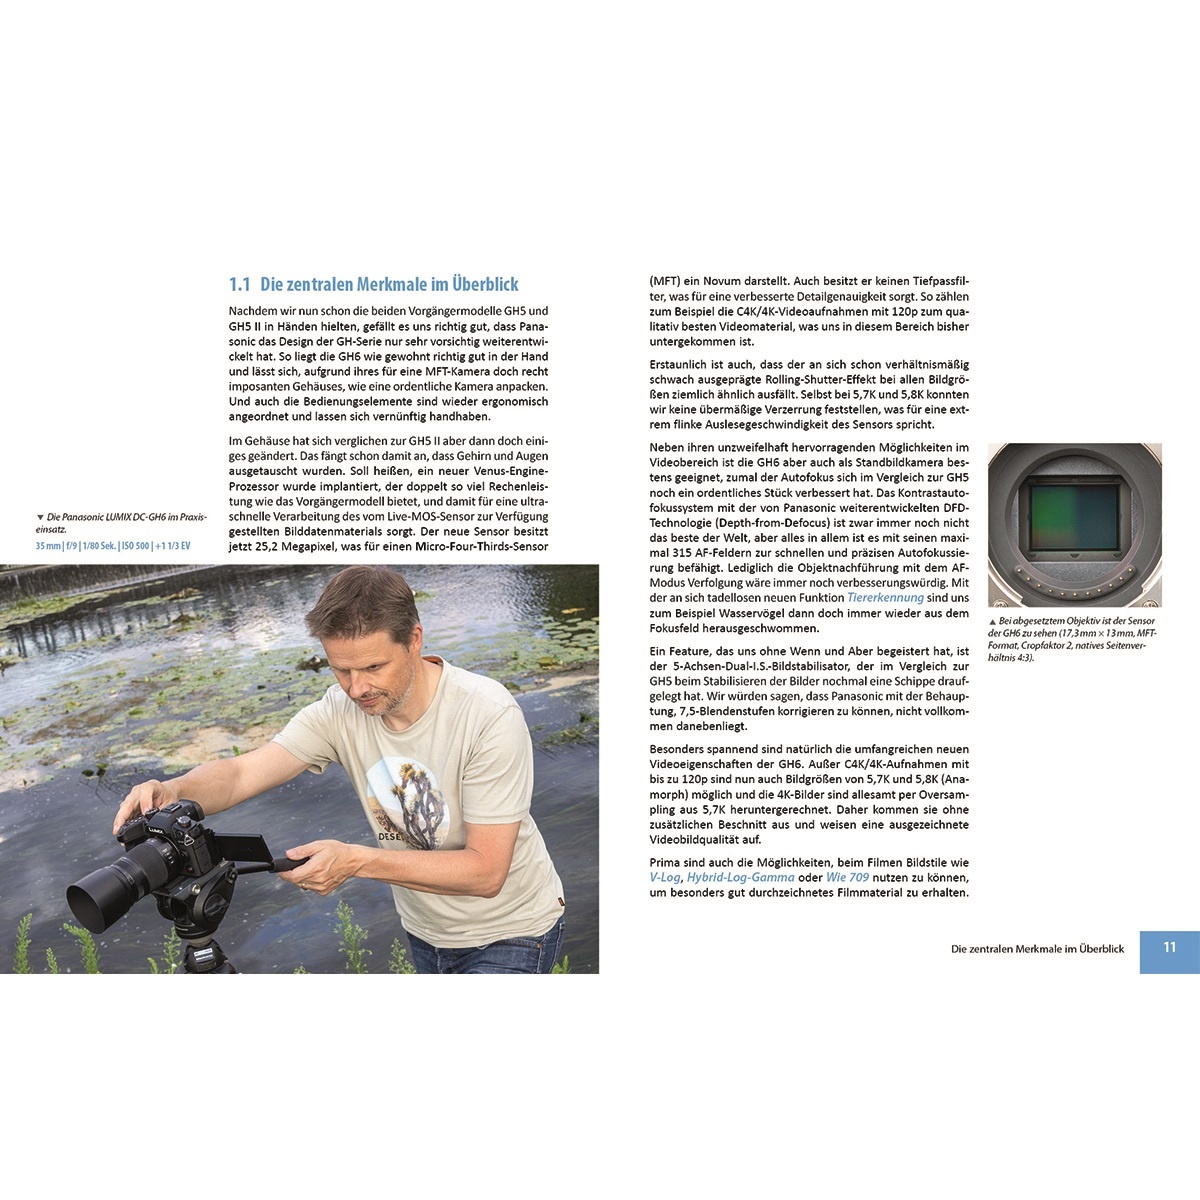 LUMIX Kamera Ihrer DC-GH6 Das zu Praxisbuch Panasonic - umfangreiche